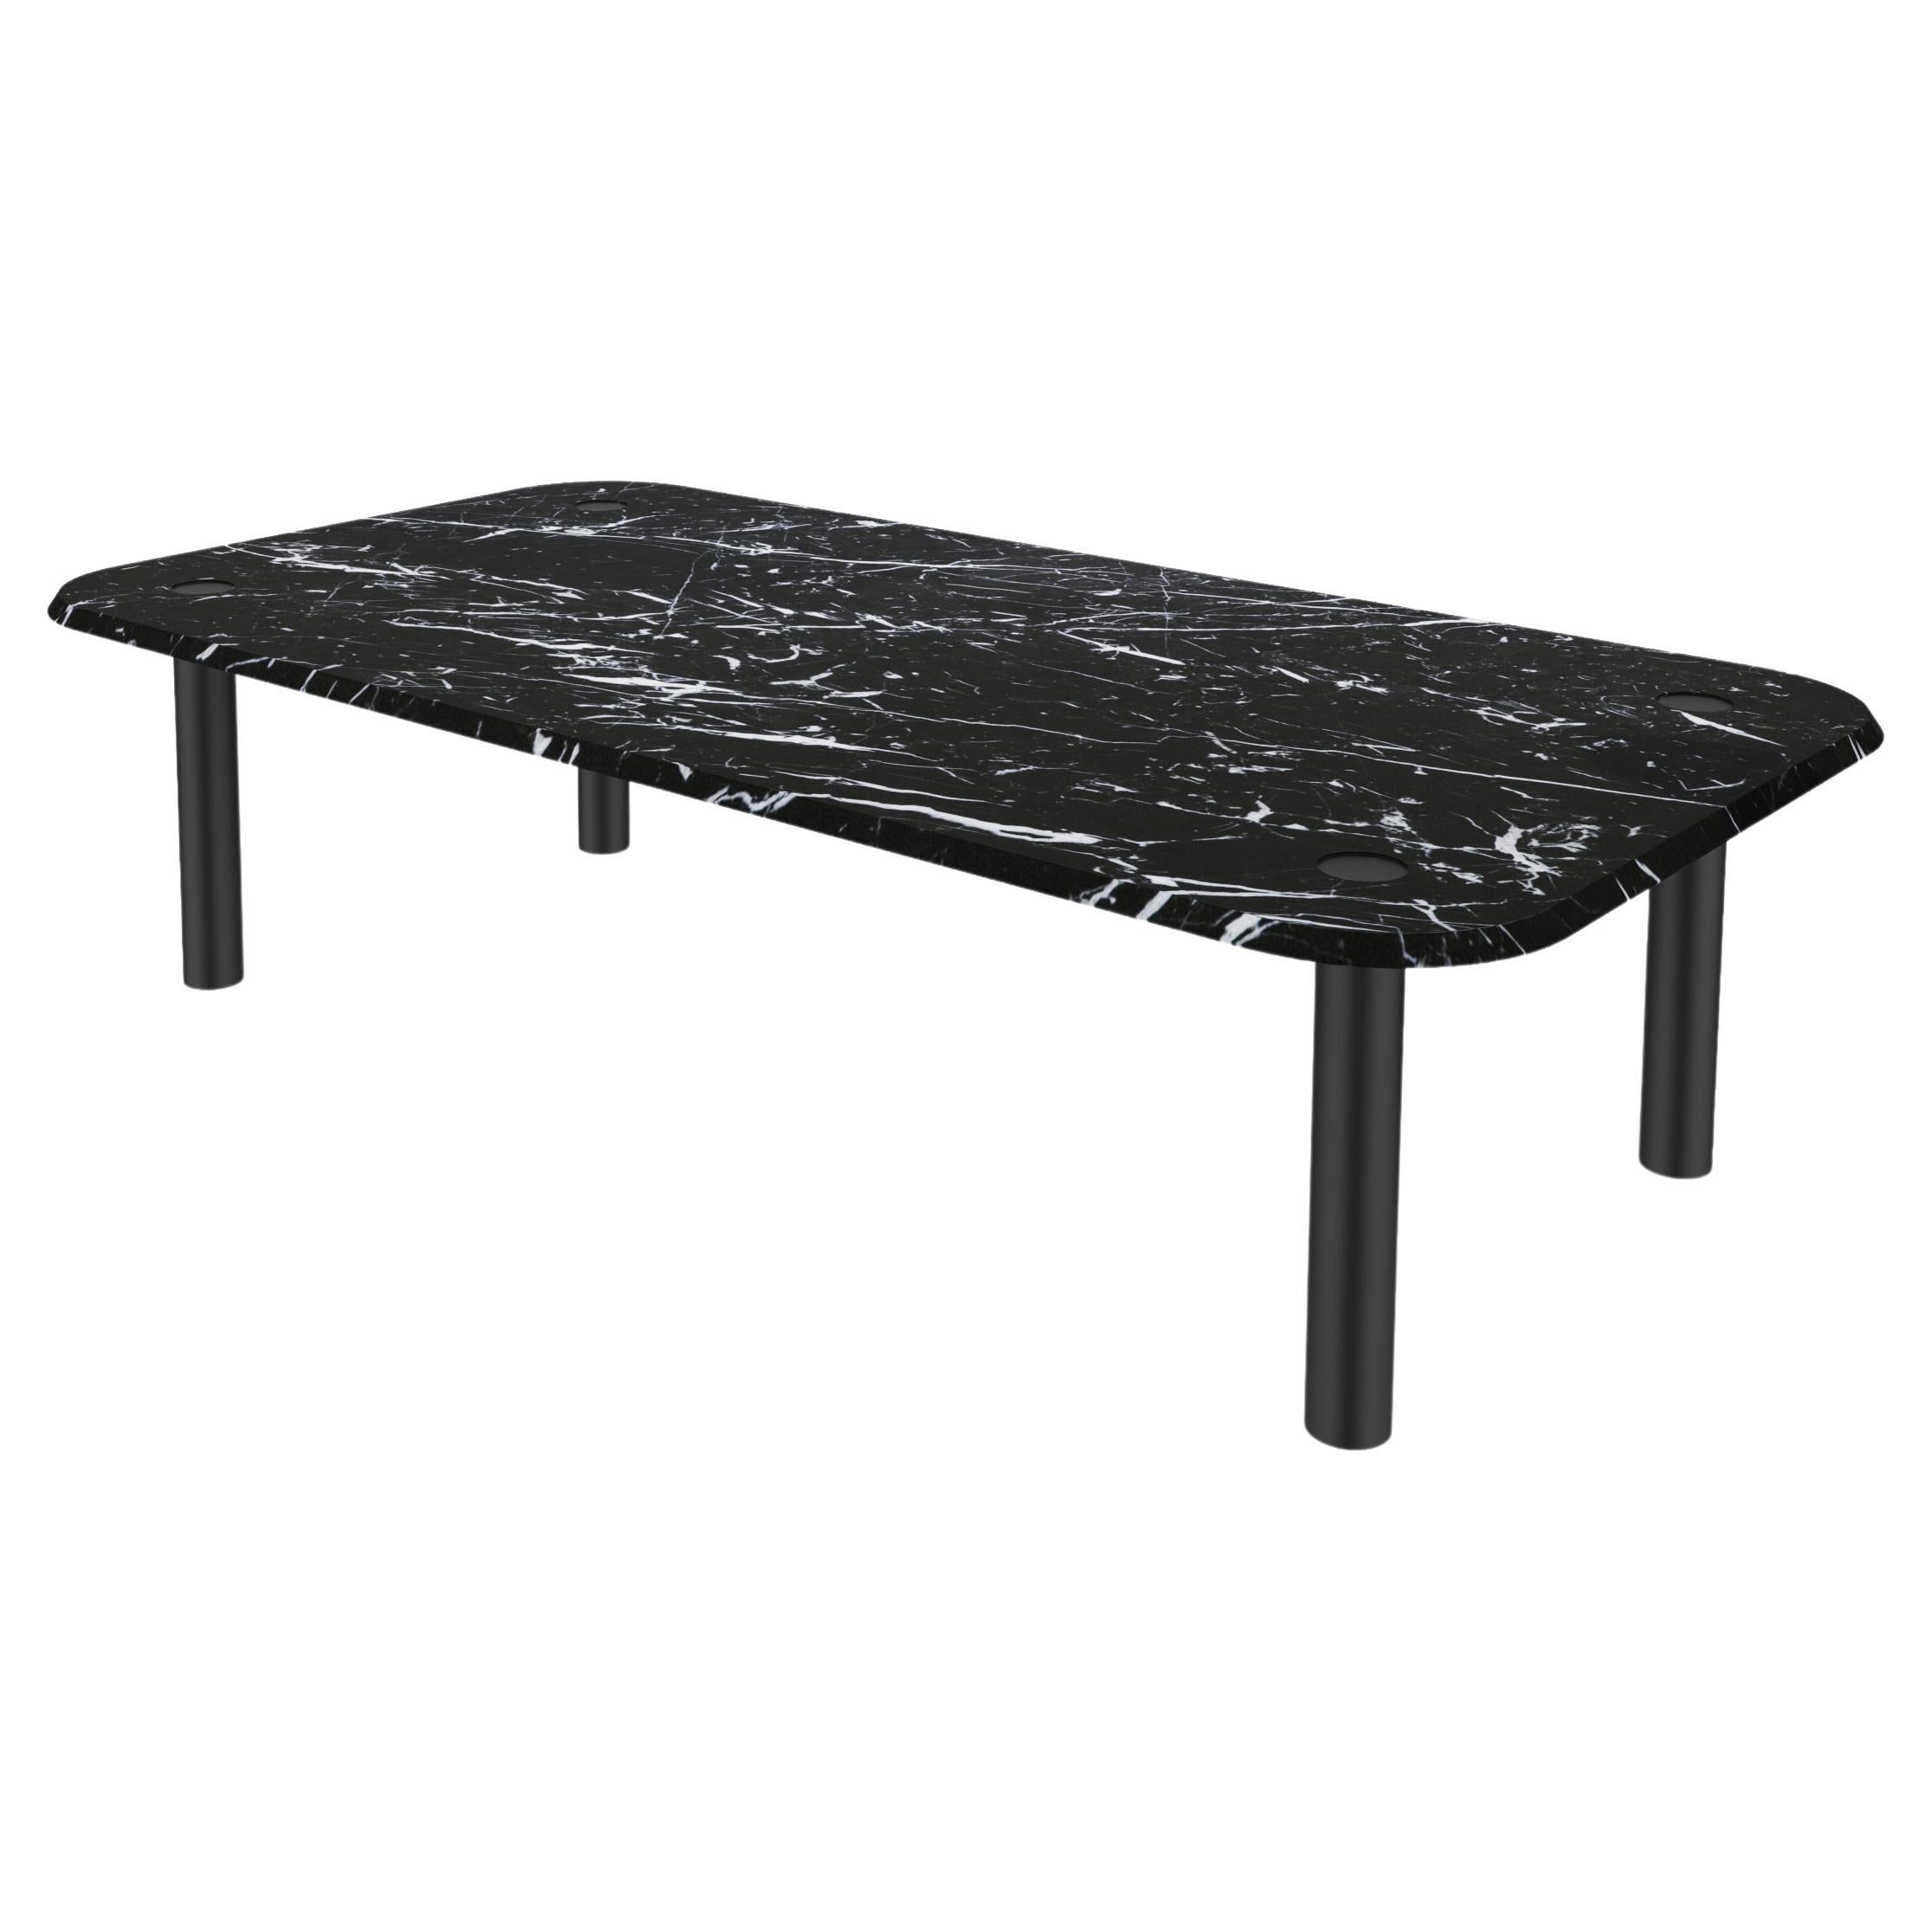 NORDST SEM Coffee Table, Italian Black Eagle Marble, Danish Modern Design, New For Sale